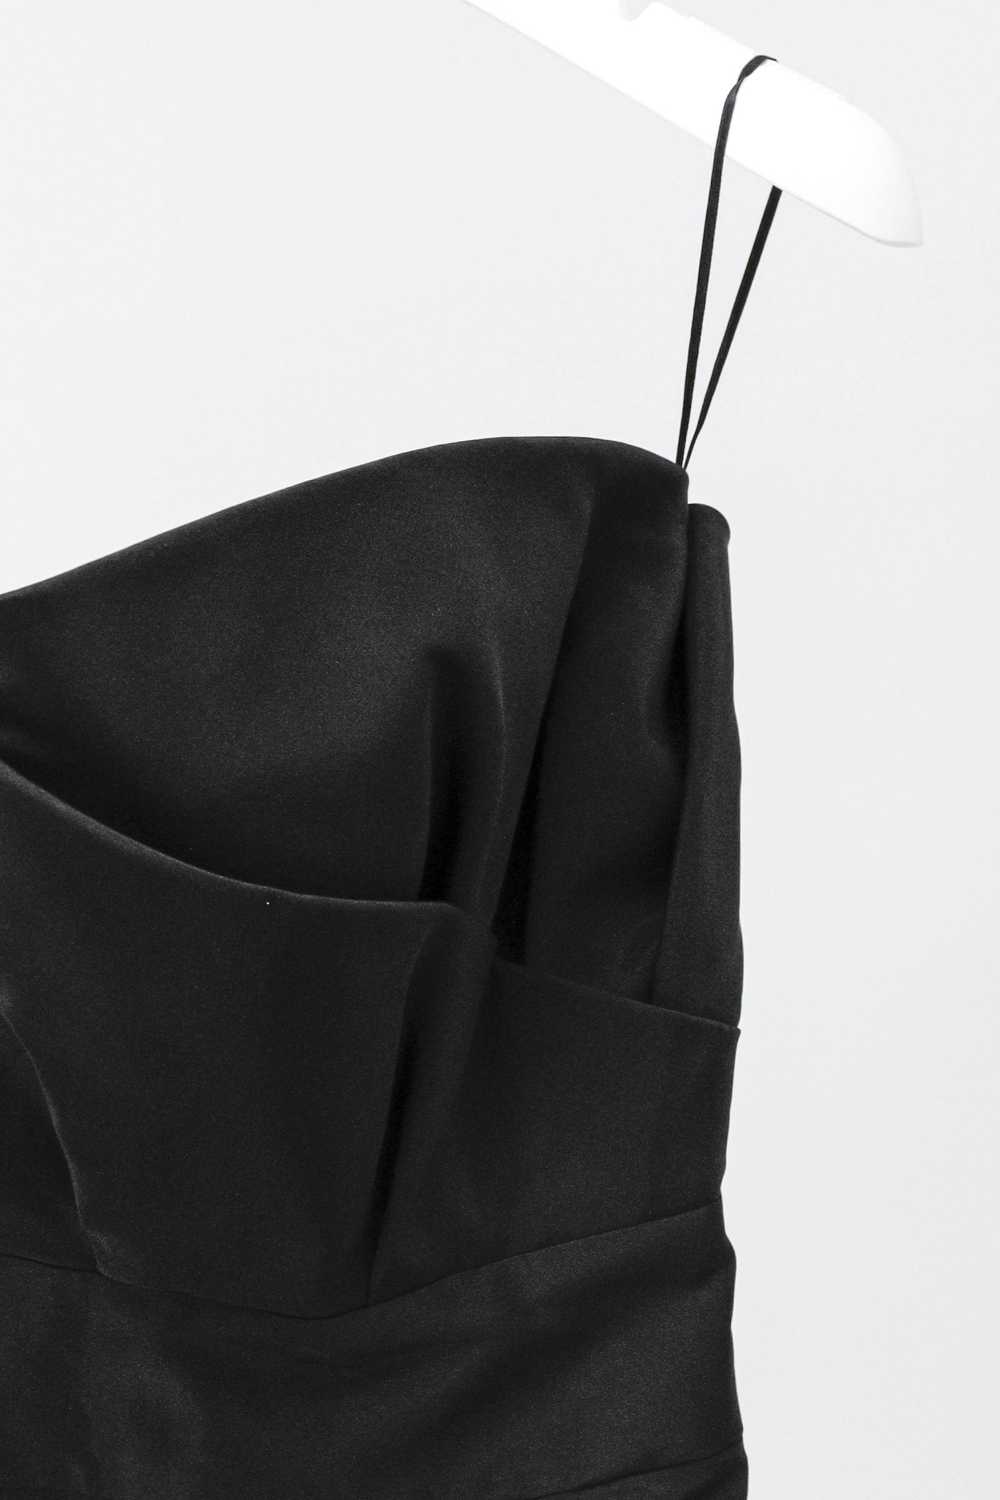 Designer Jacques Fath Black Silk Gown - image 5